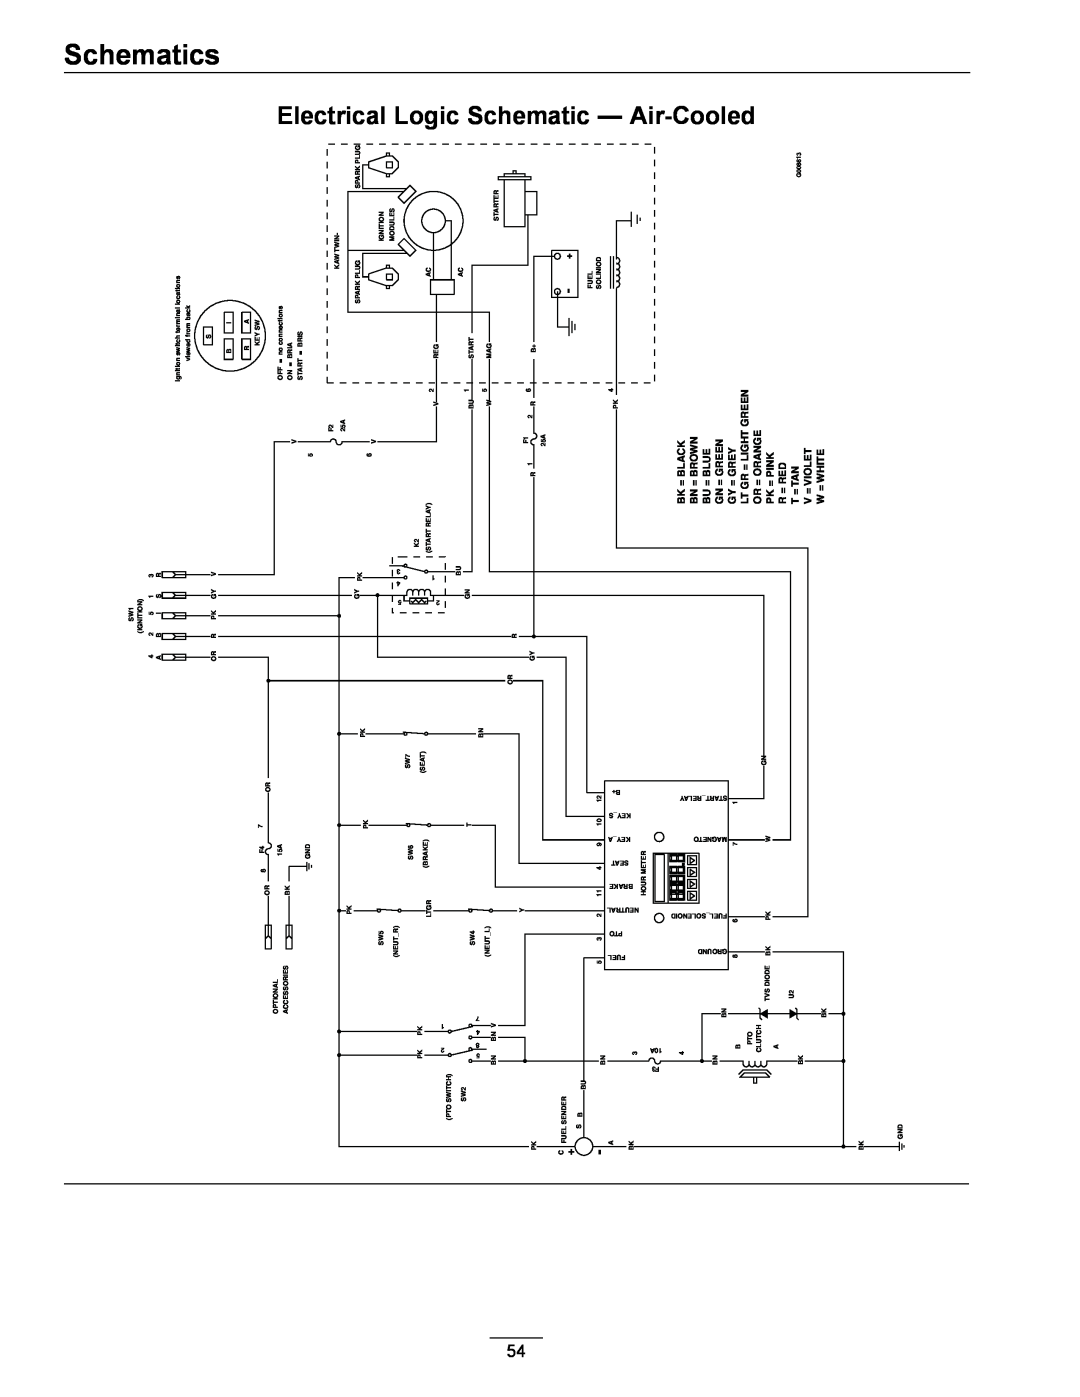 Exmark 000 & higher manual Electrical Logic Schematic - Air-Cooled, Schematics 